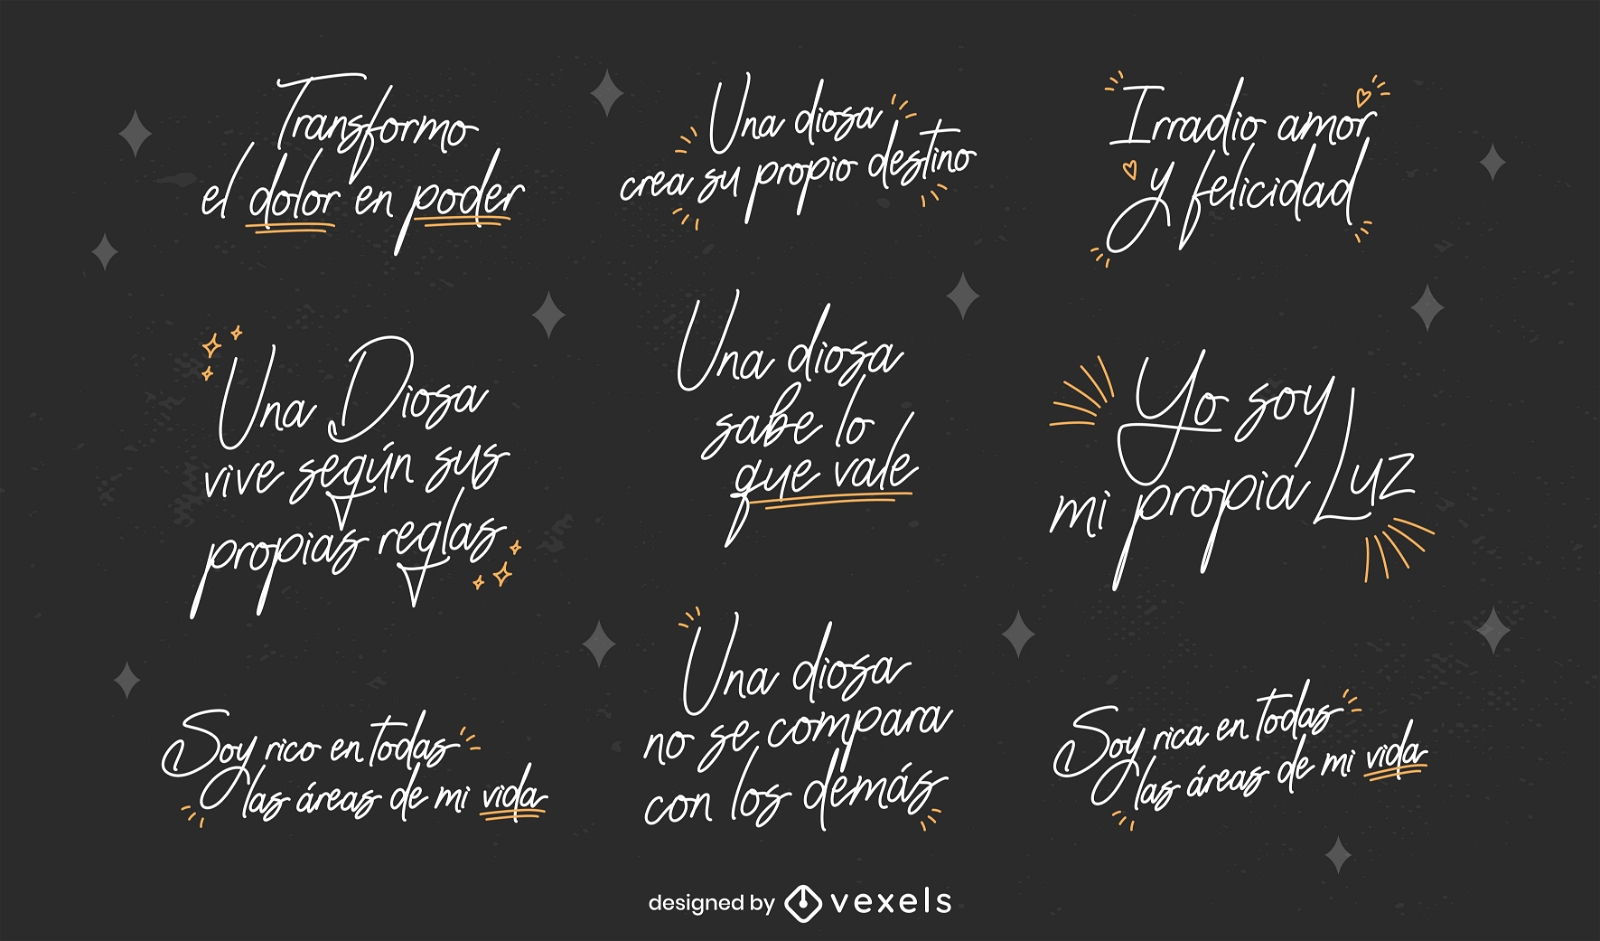 Spanish affirmations quotes set